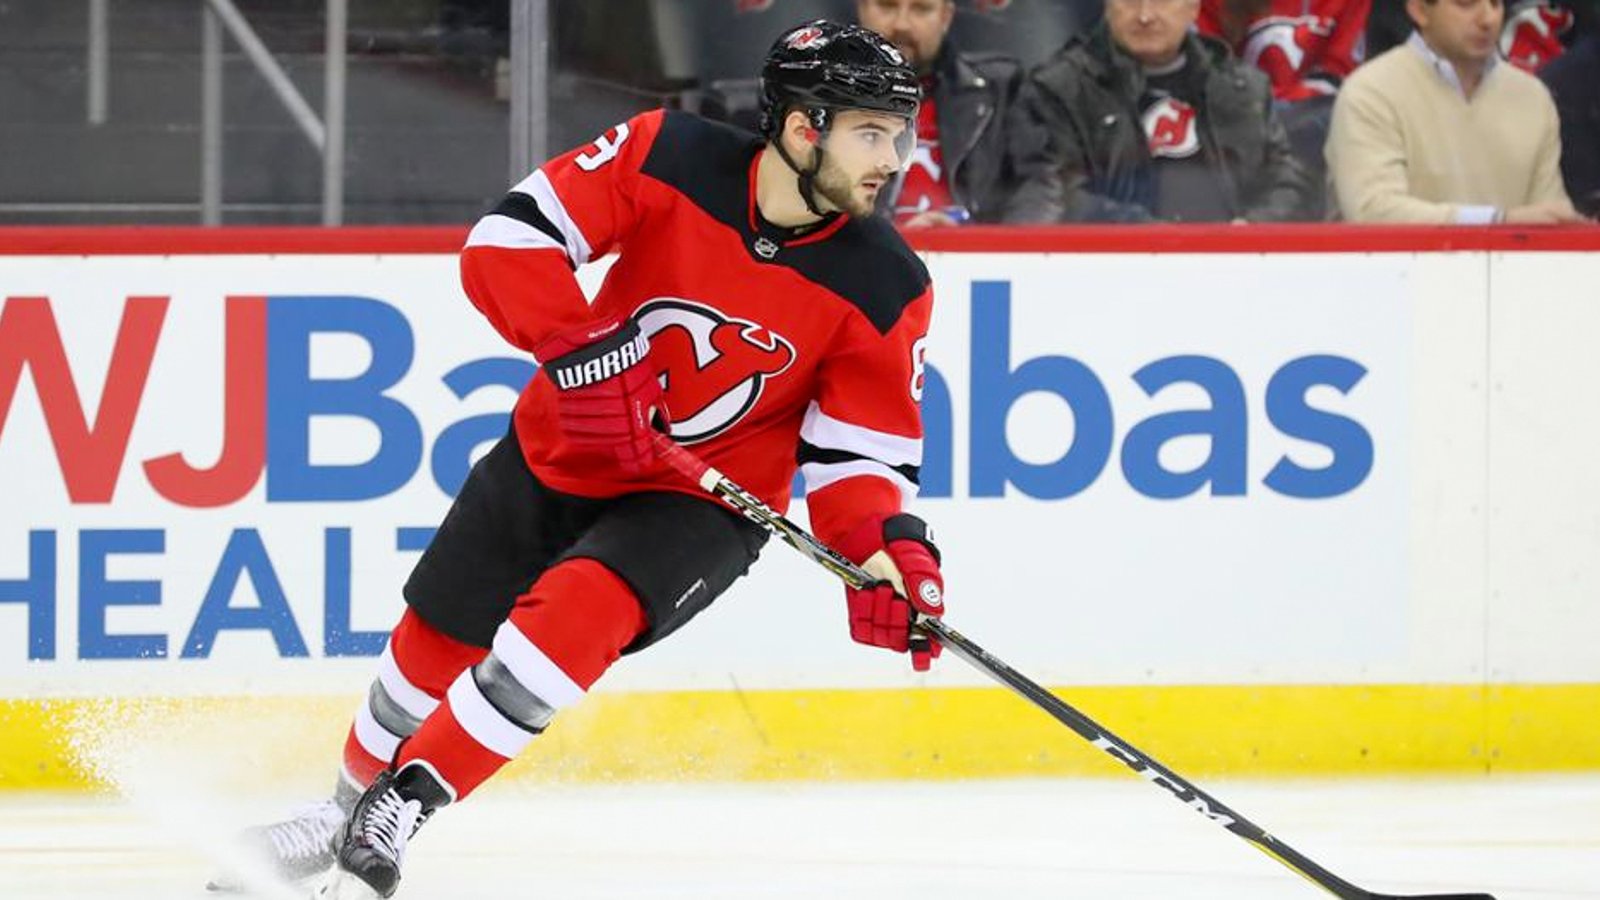 Trade Alert: Devils trade former top prospect Will Butcher